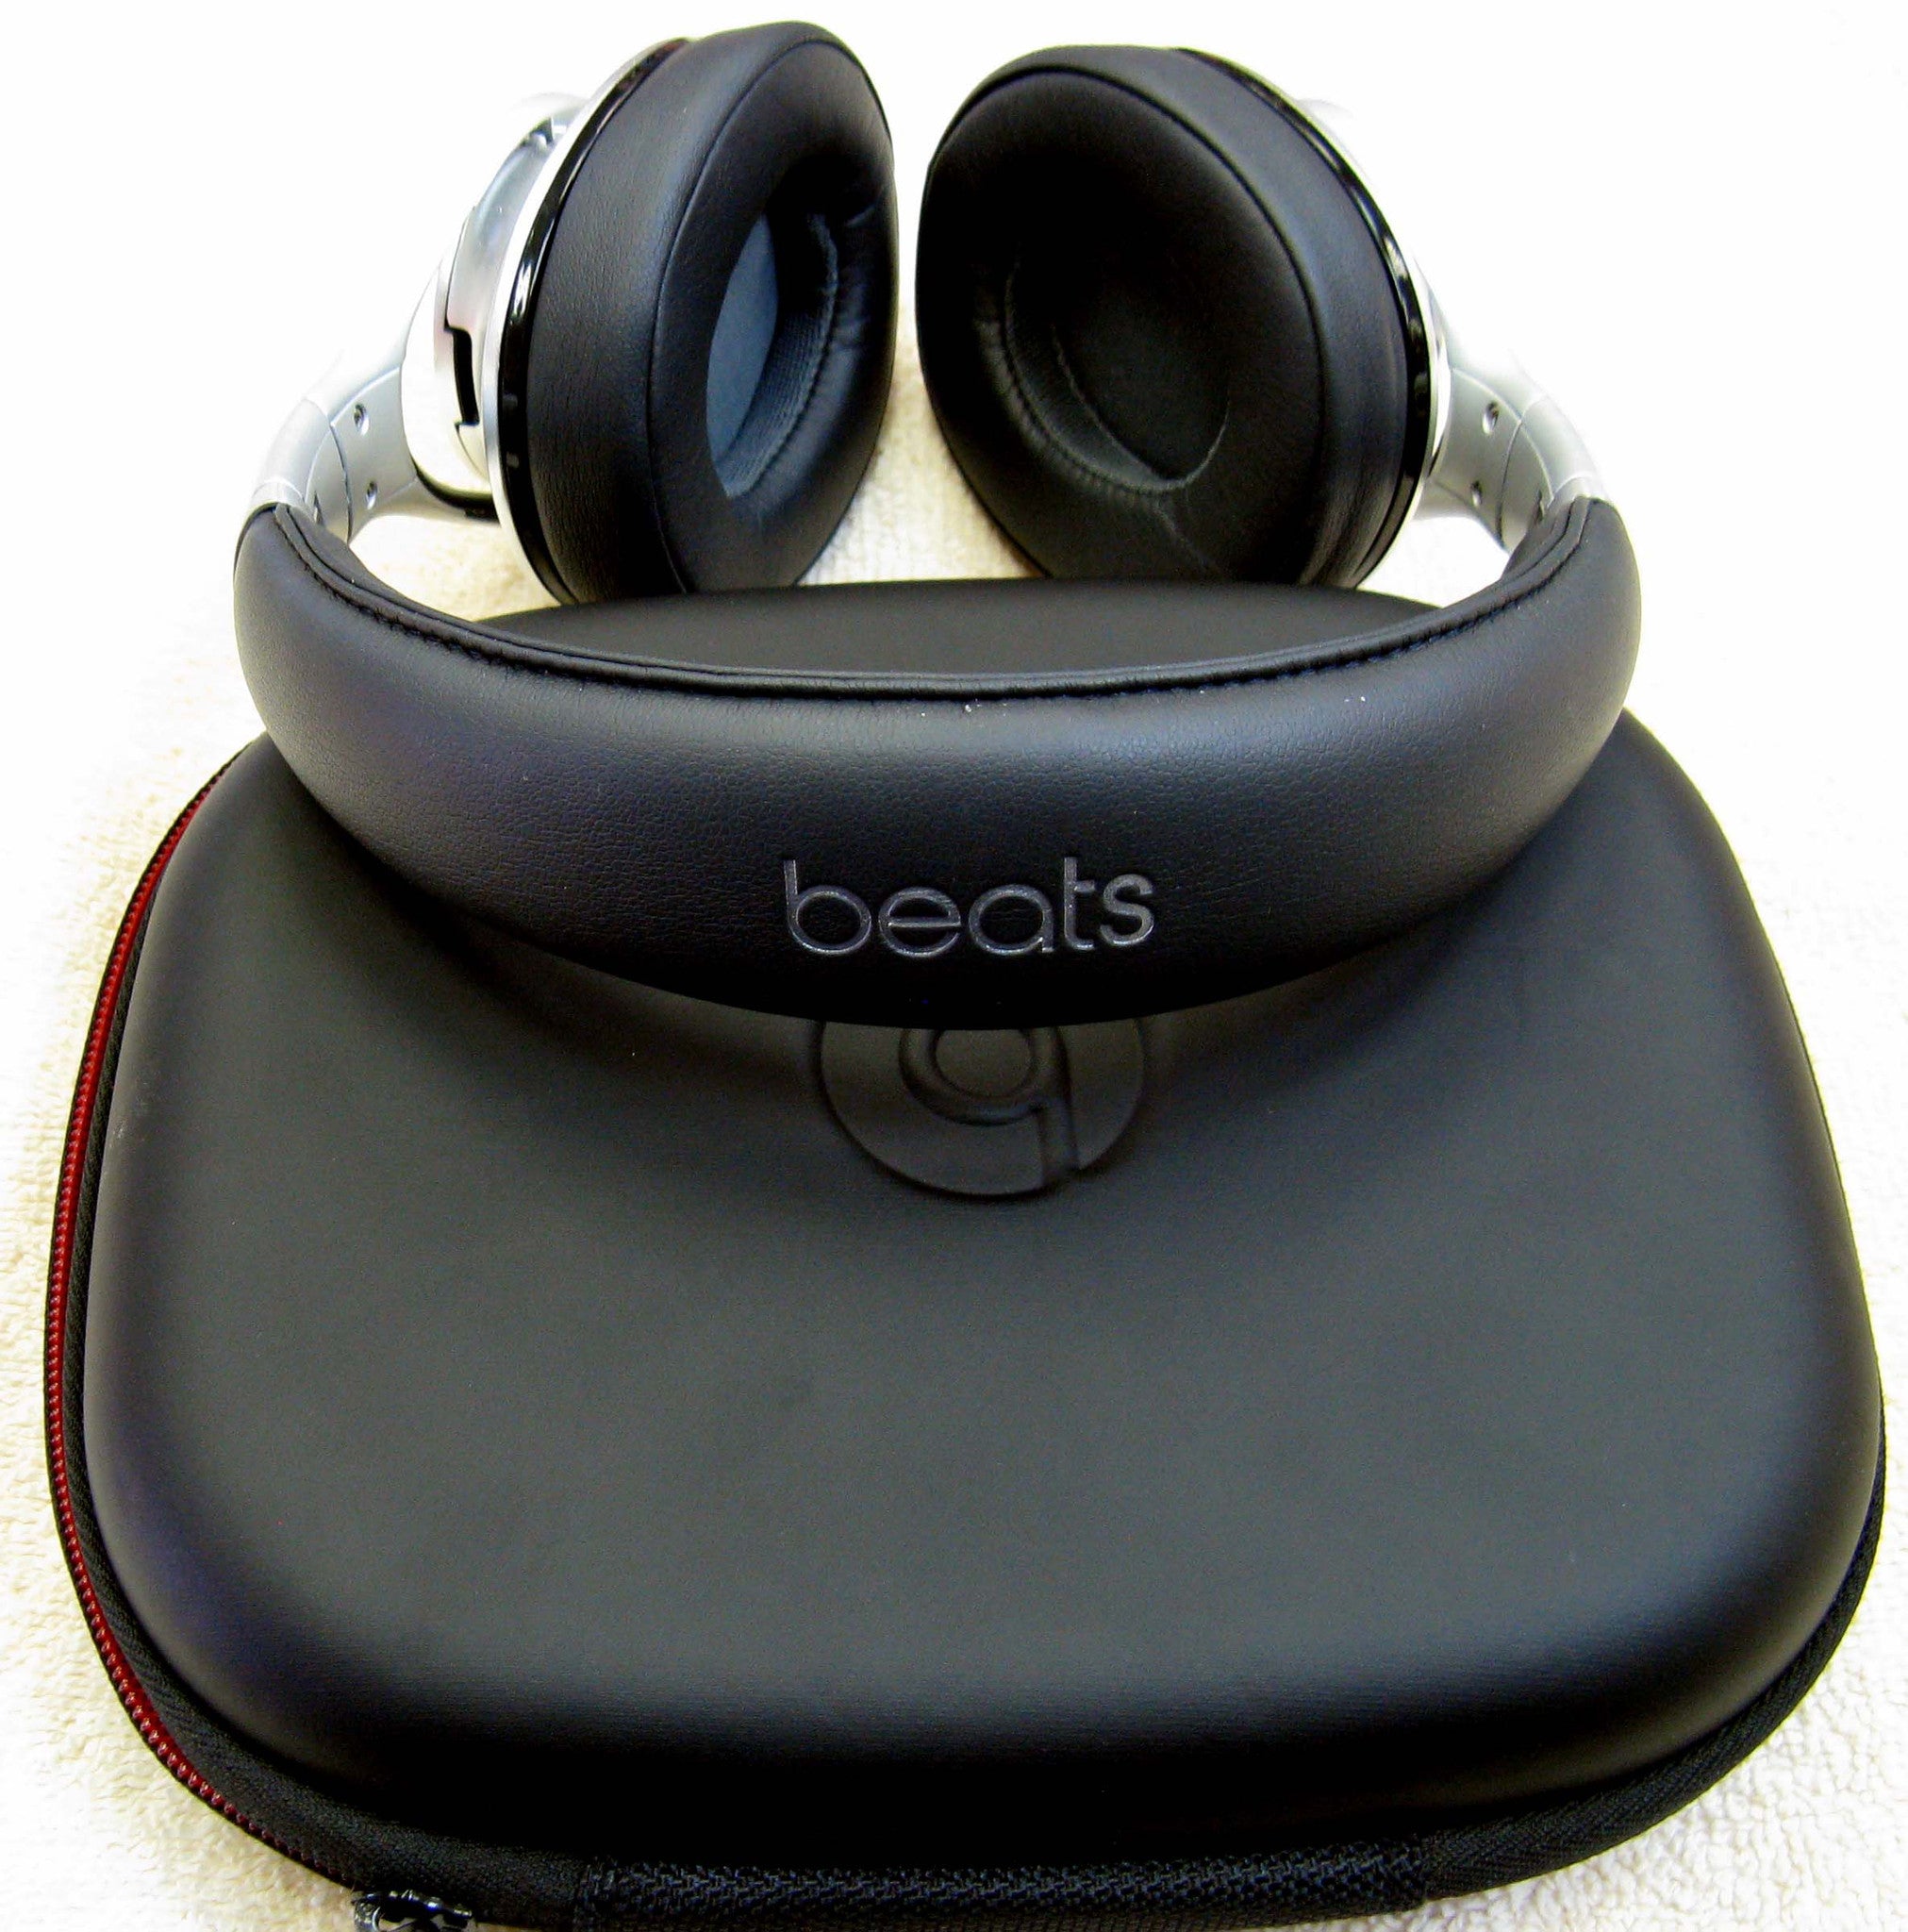 Beats by Dr. Dre Executive Noise Canceling Headphones